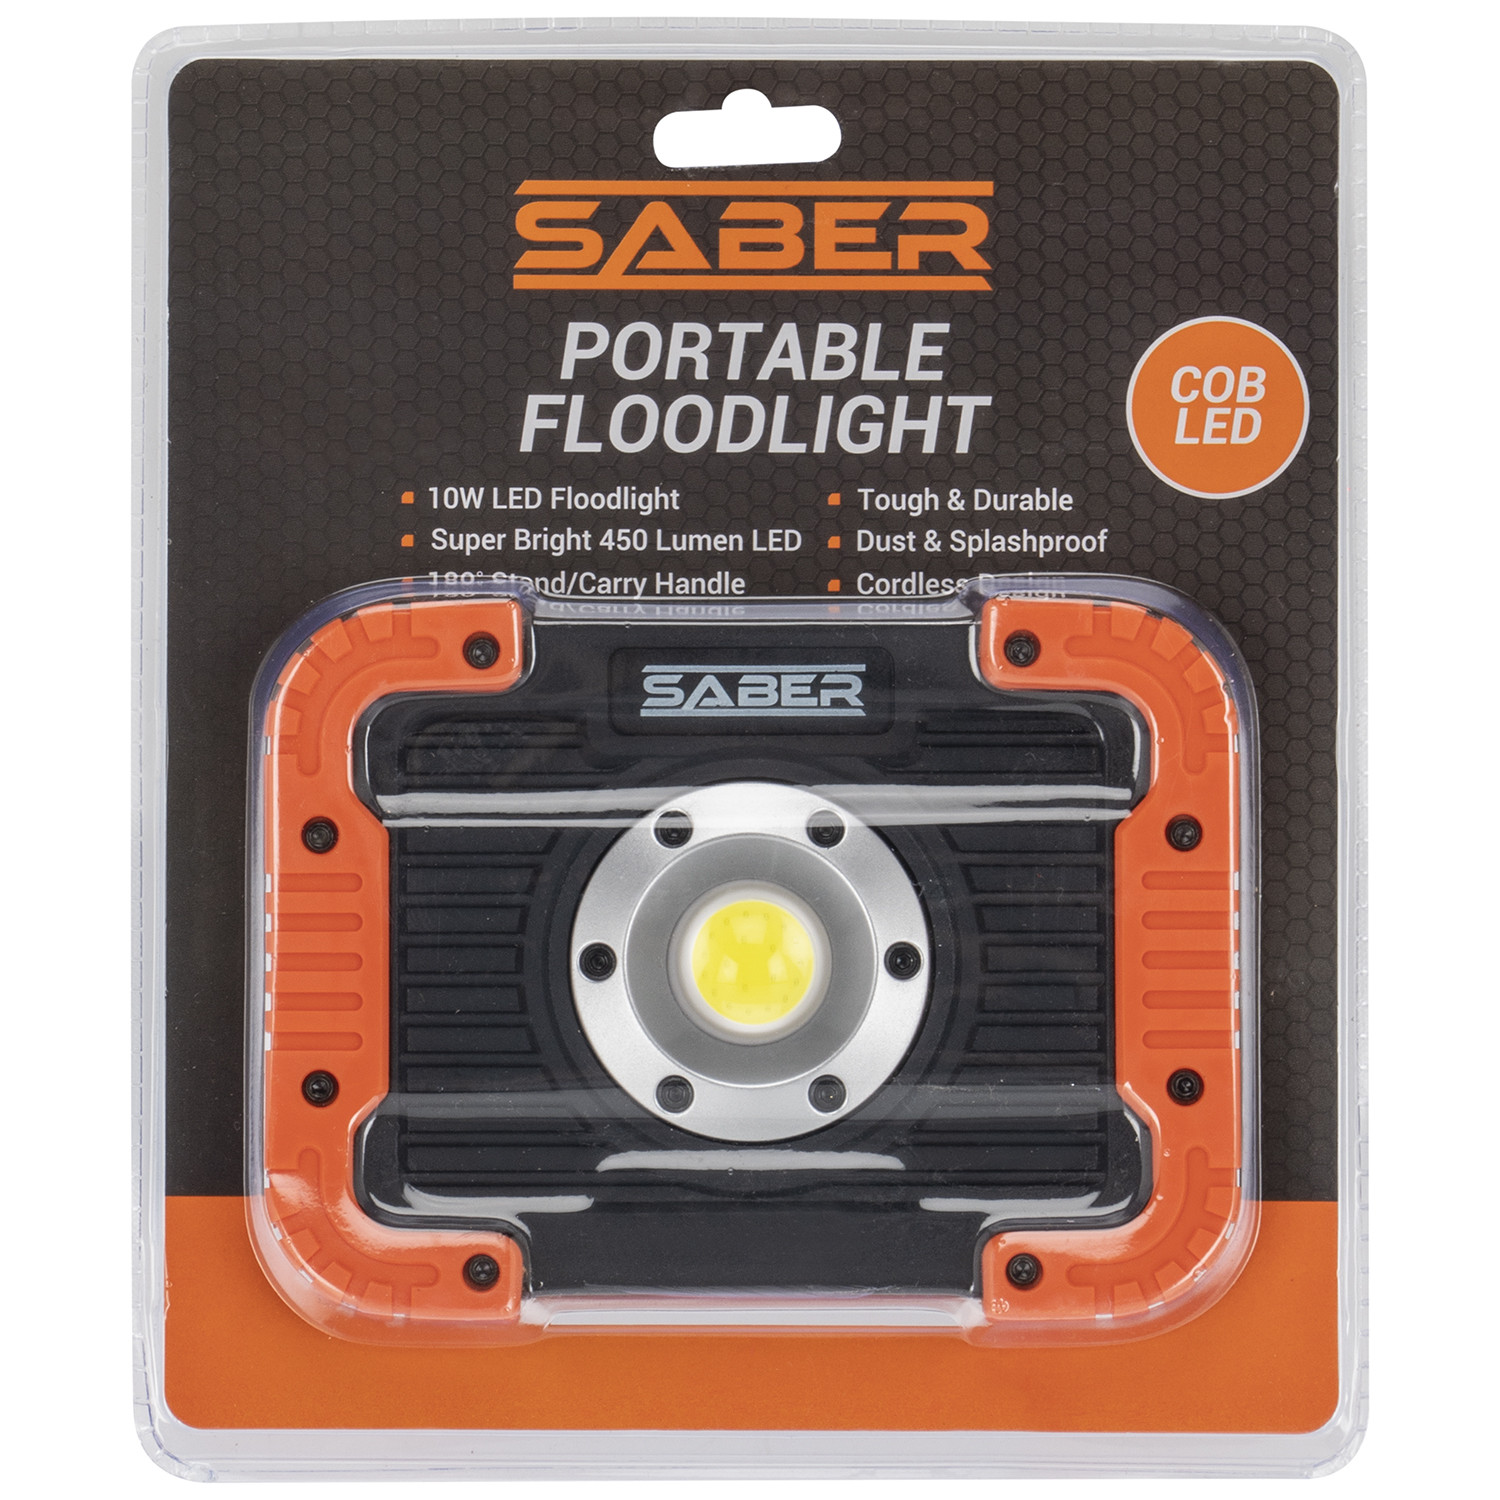 Portable COB LED Floodlight Image 1